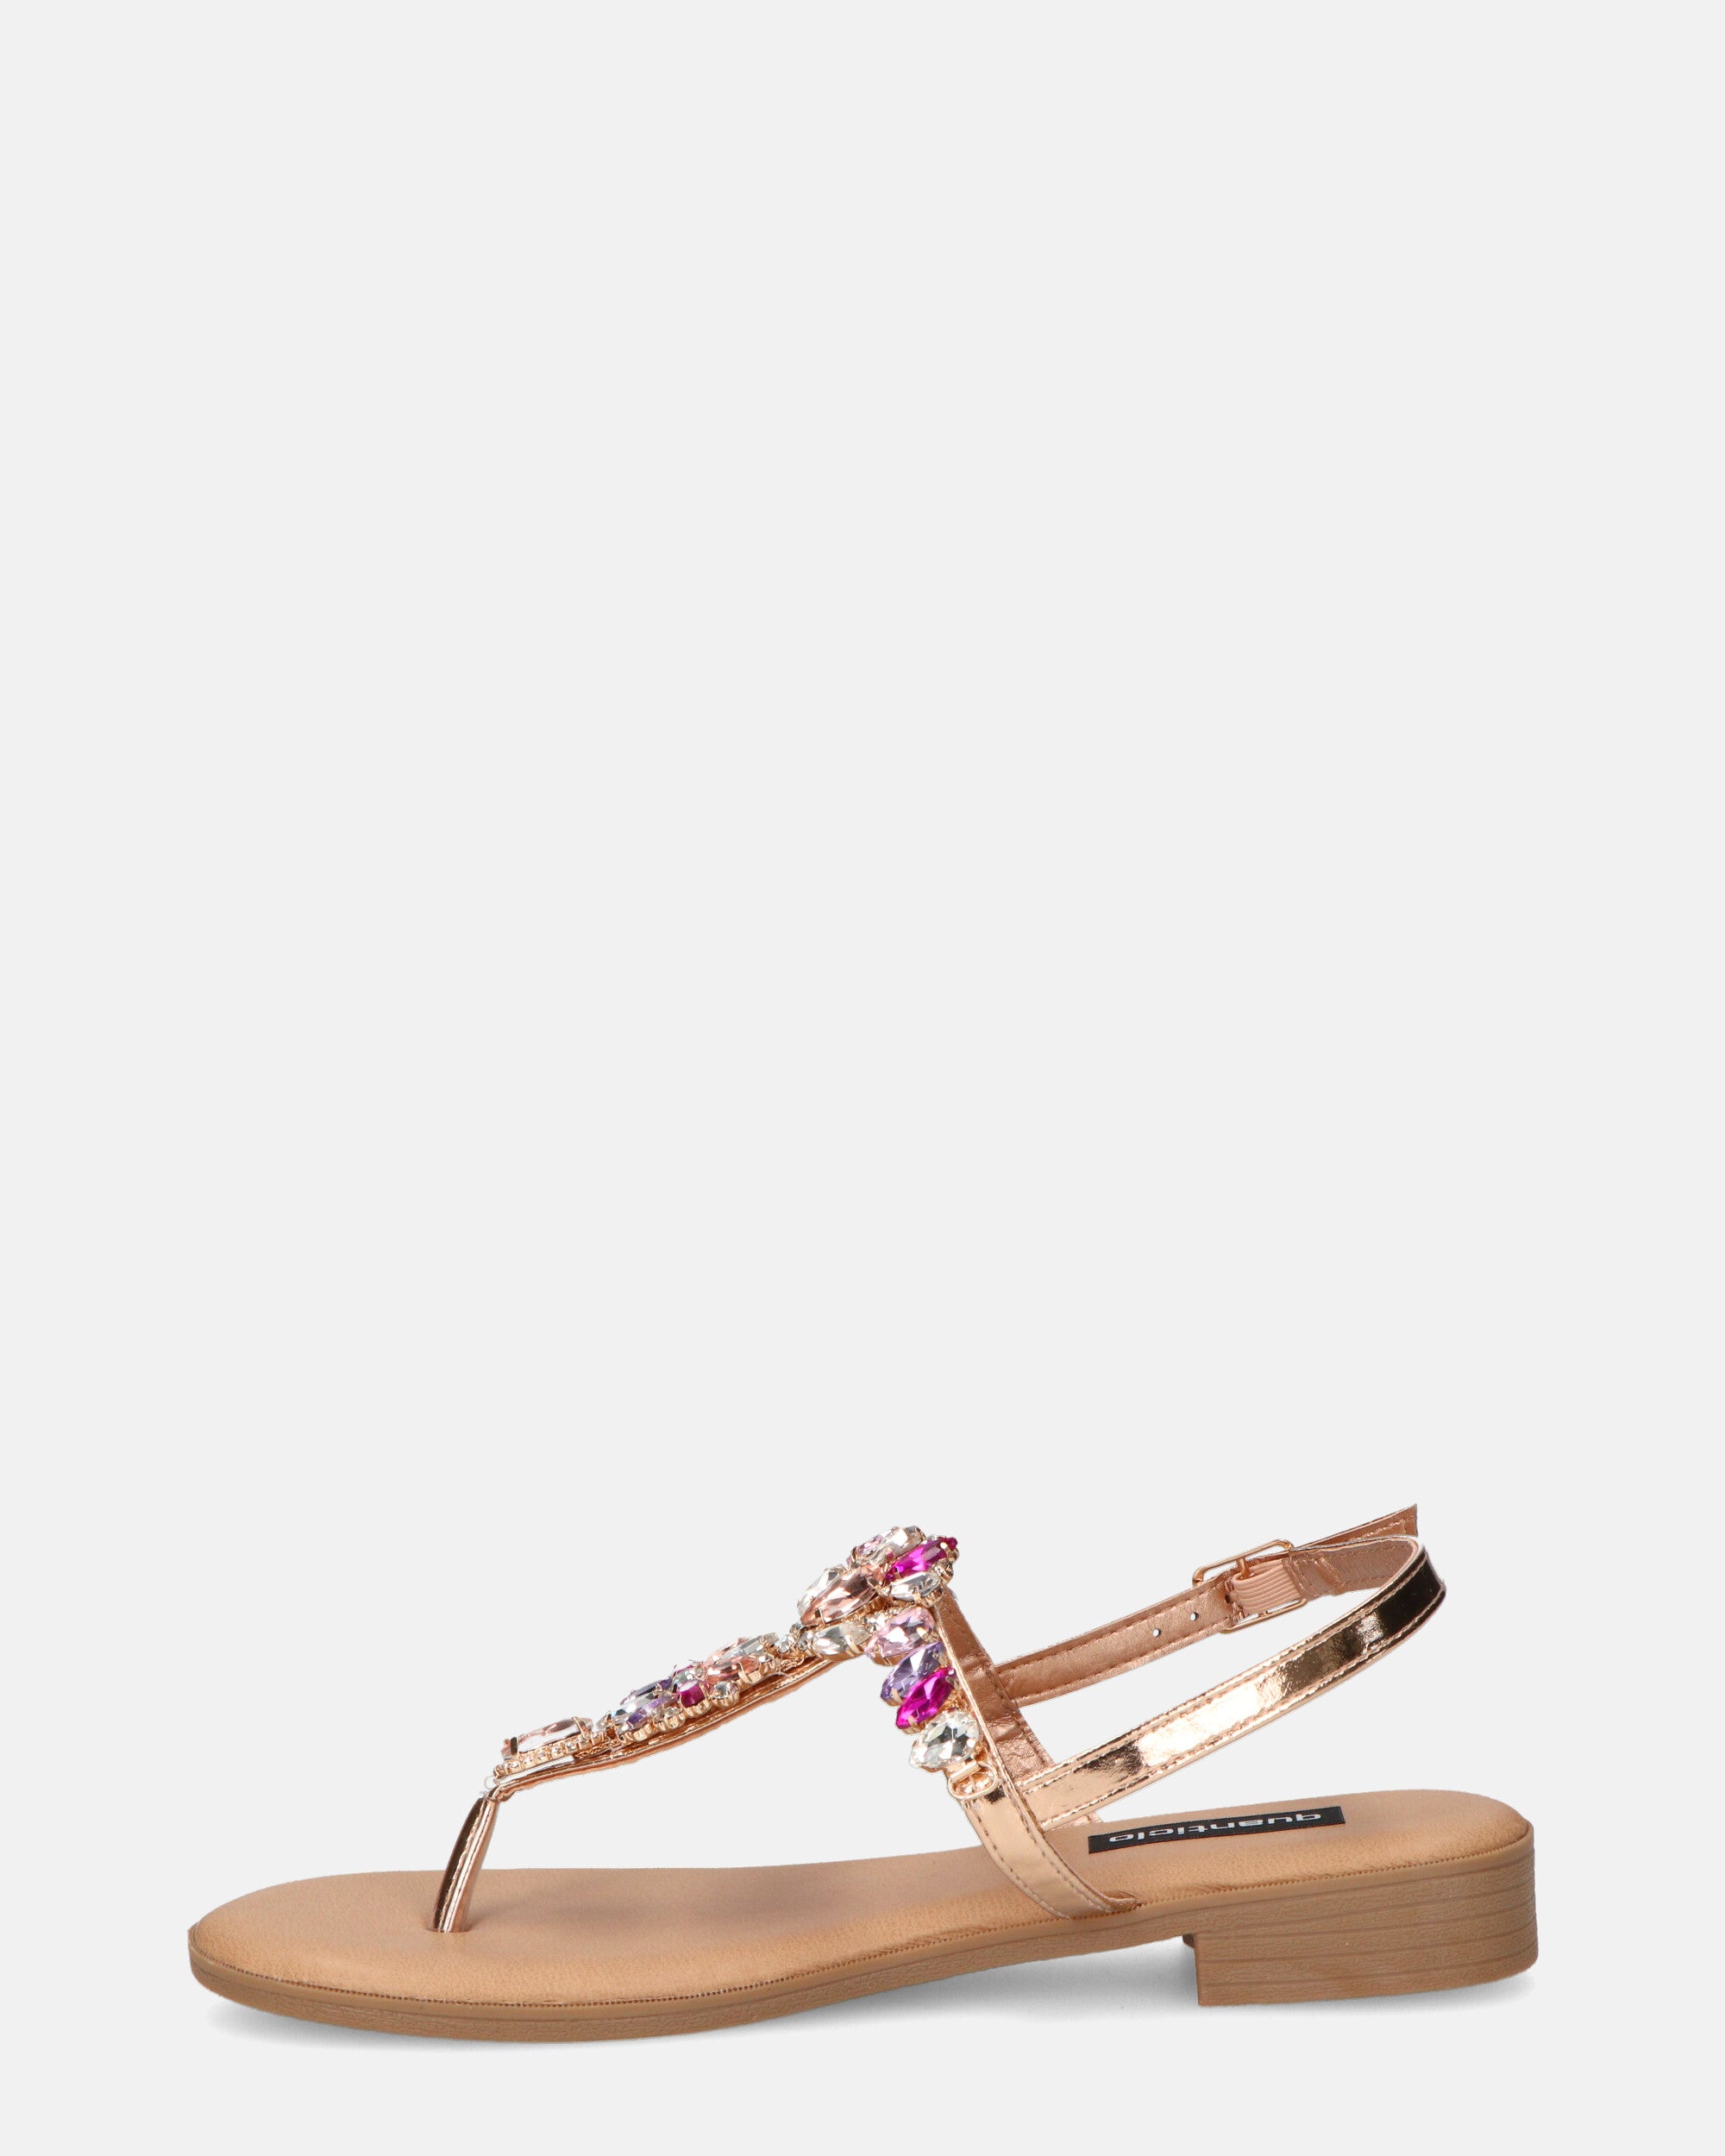 MIETTA - sandali beige con gemme colorate e cinturino regolabile